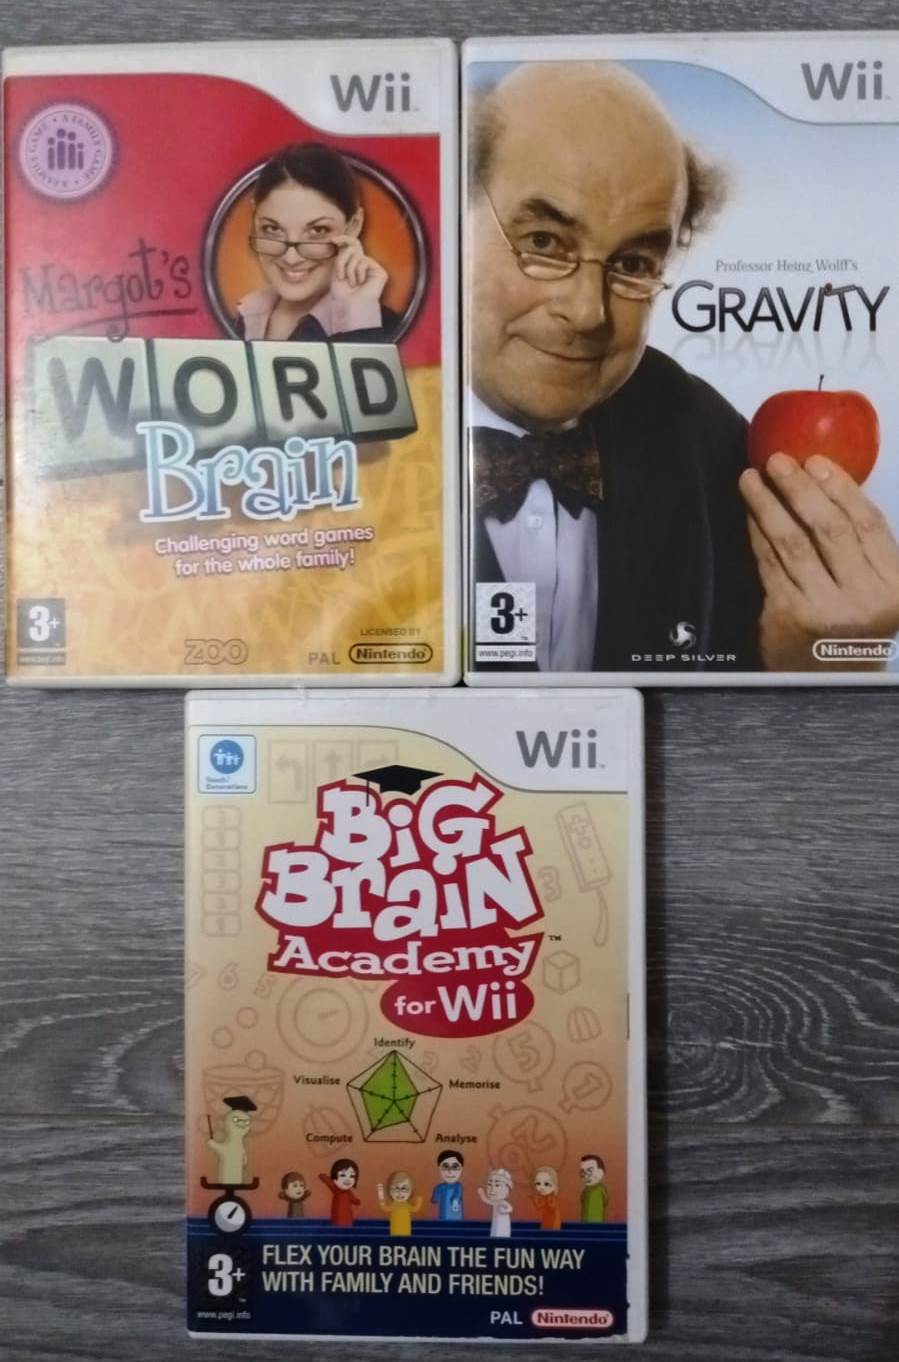 Joc Nintendo Wii Big Brain Academy for Wii + Margot's Word Brain + Proffesor Heinz Wolf's Gravity